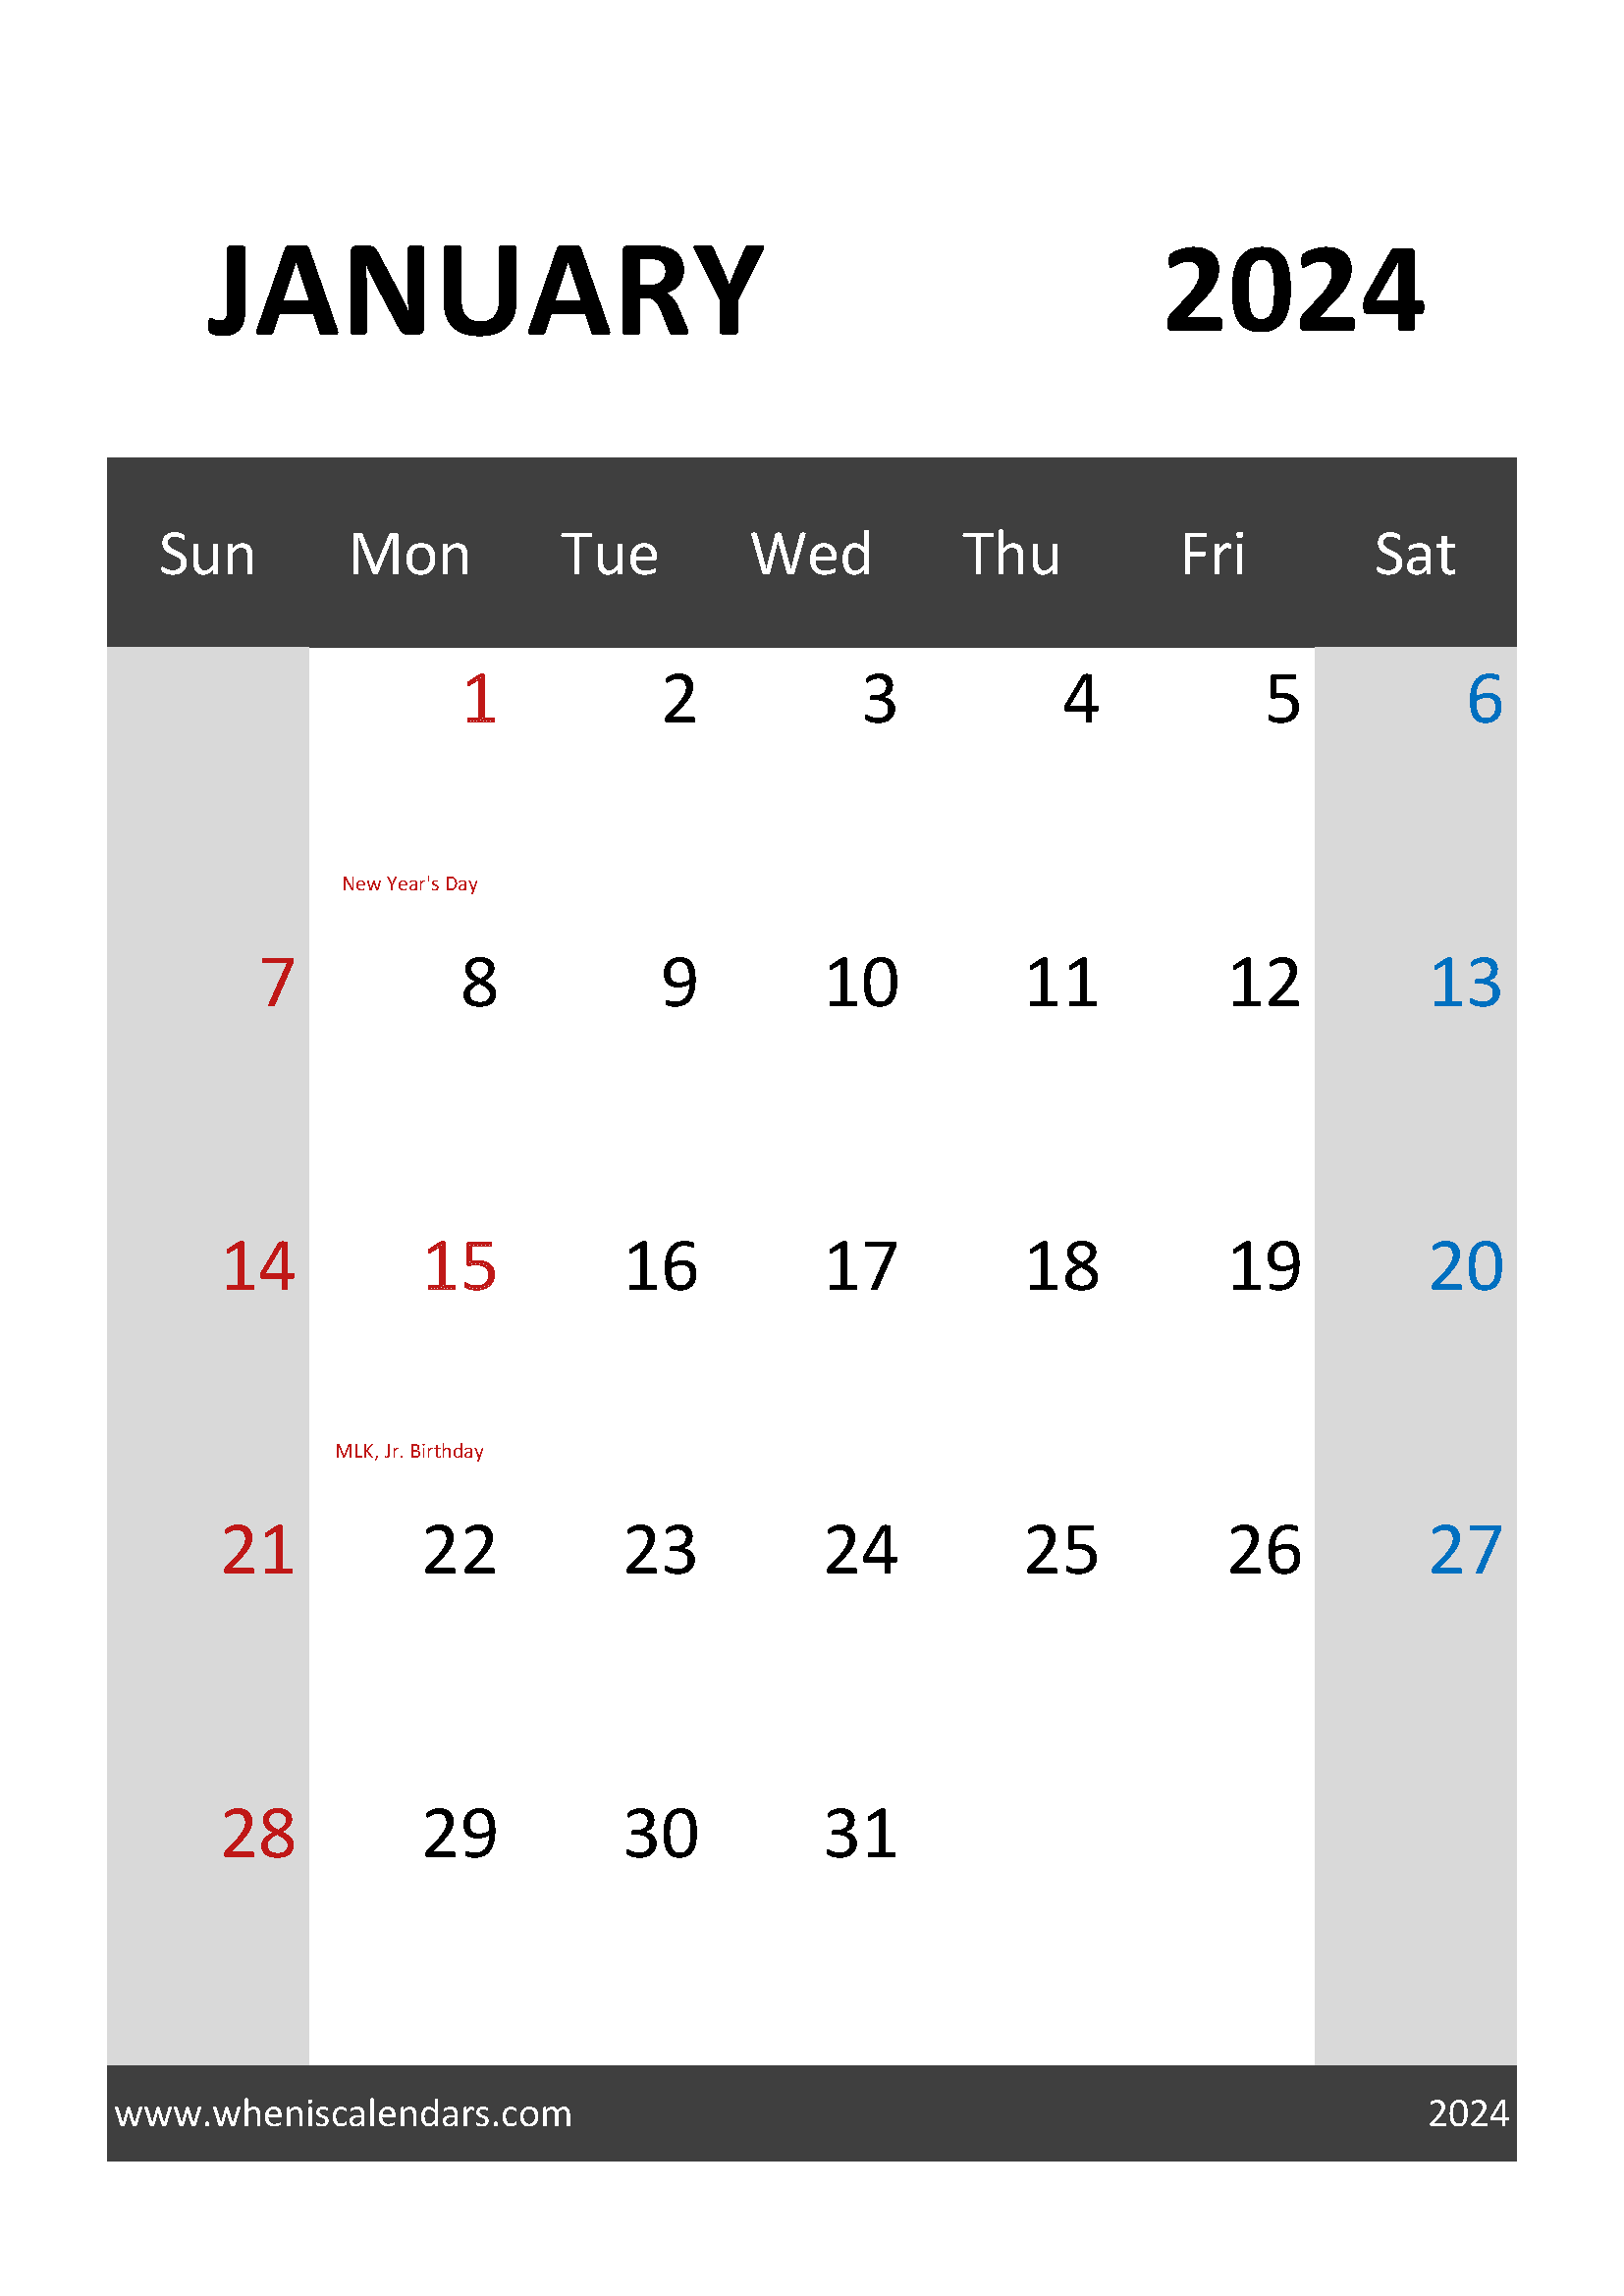 January 2024 Calendar planner Printable Monthly Calendar